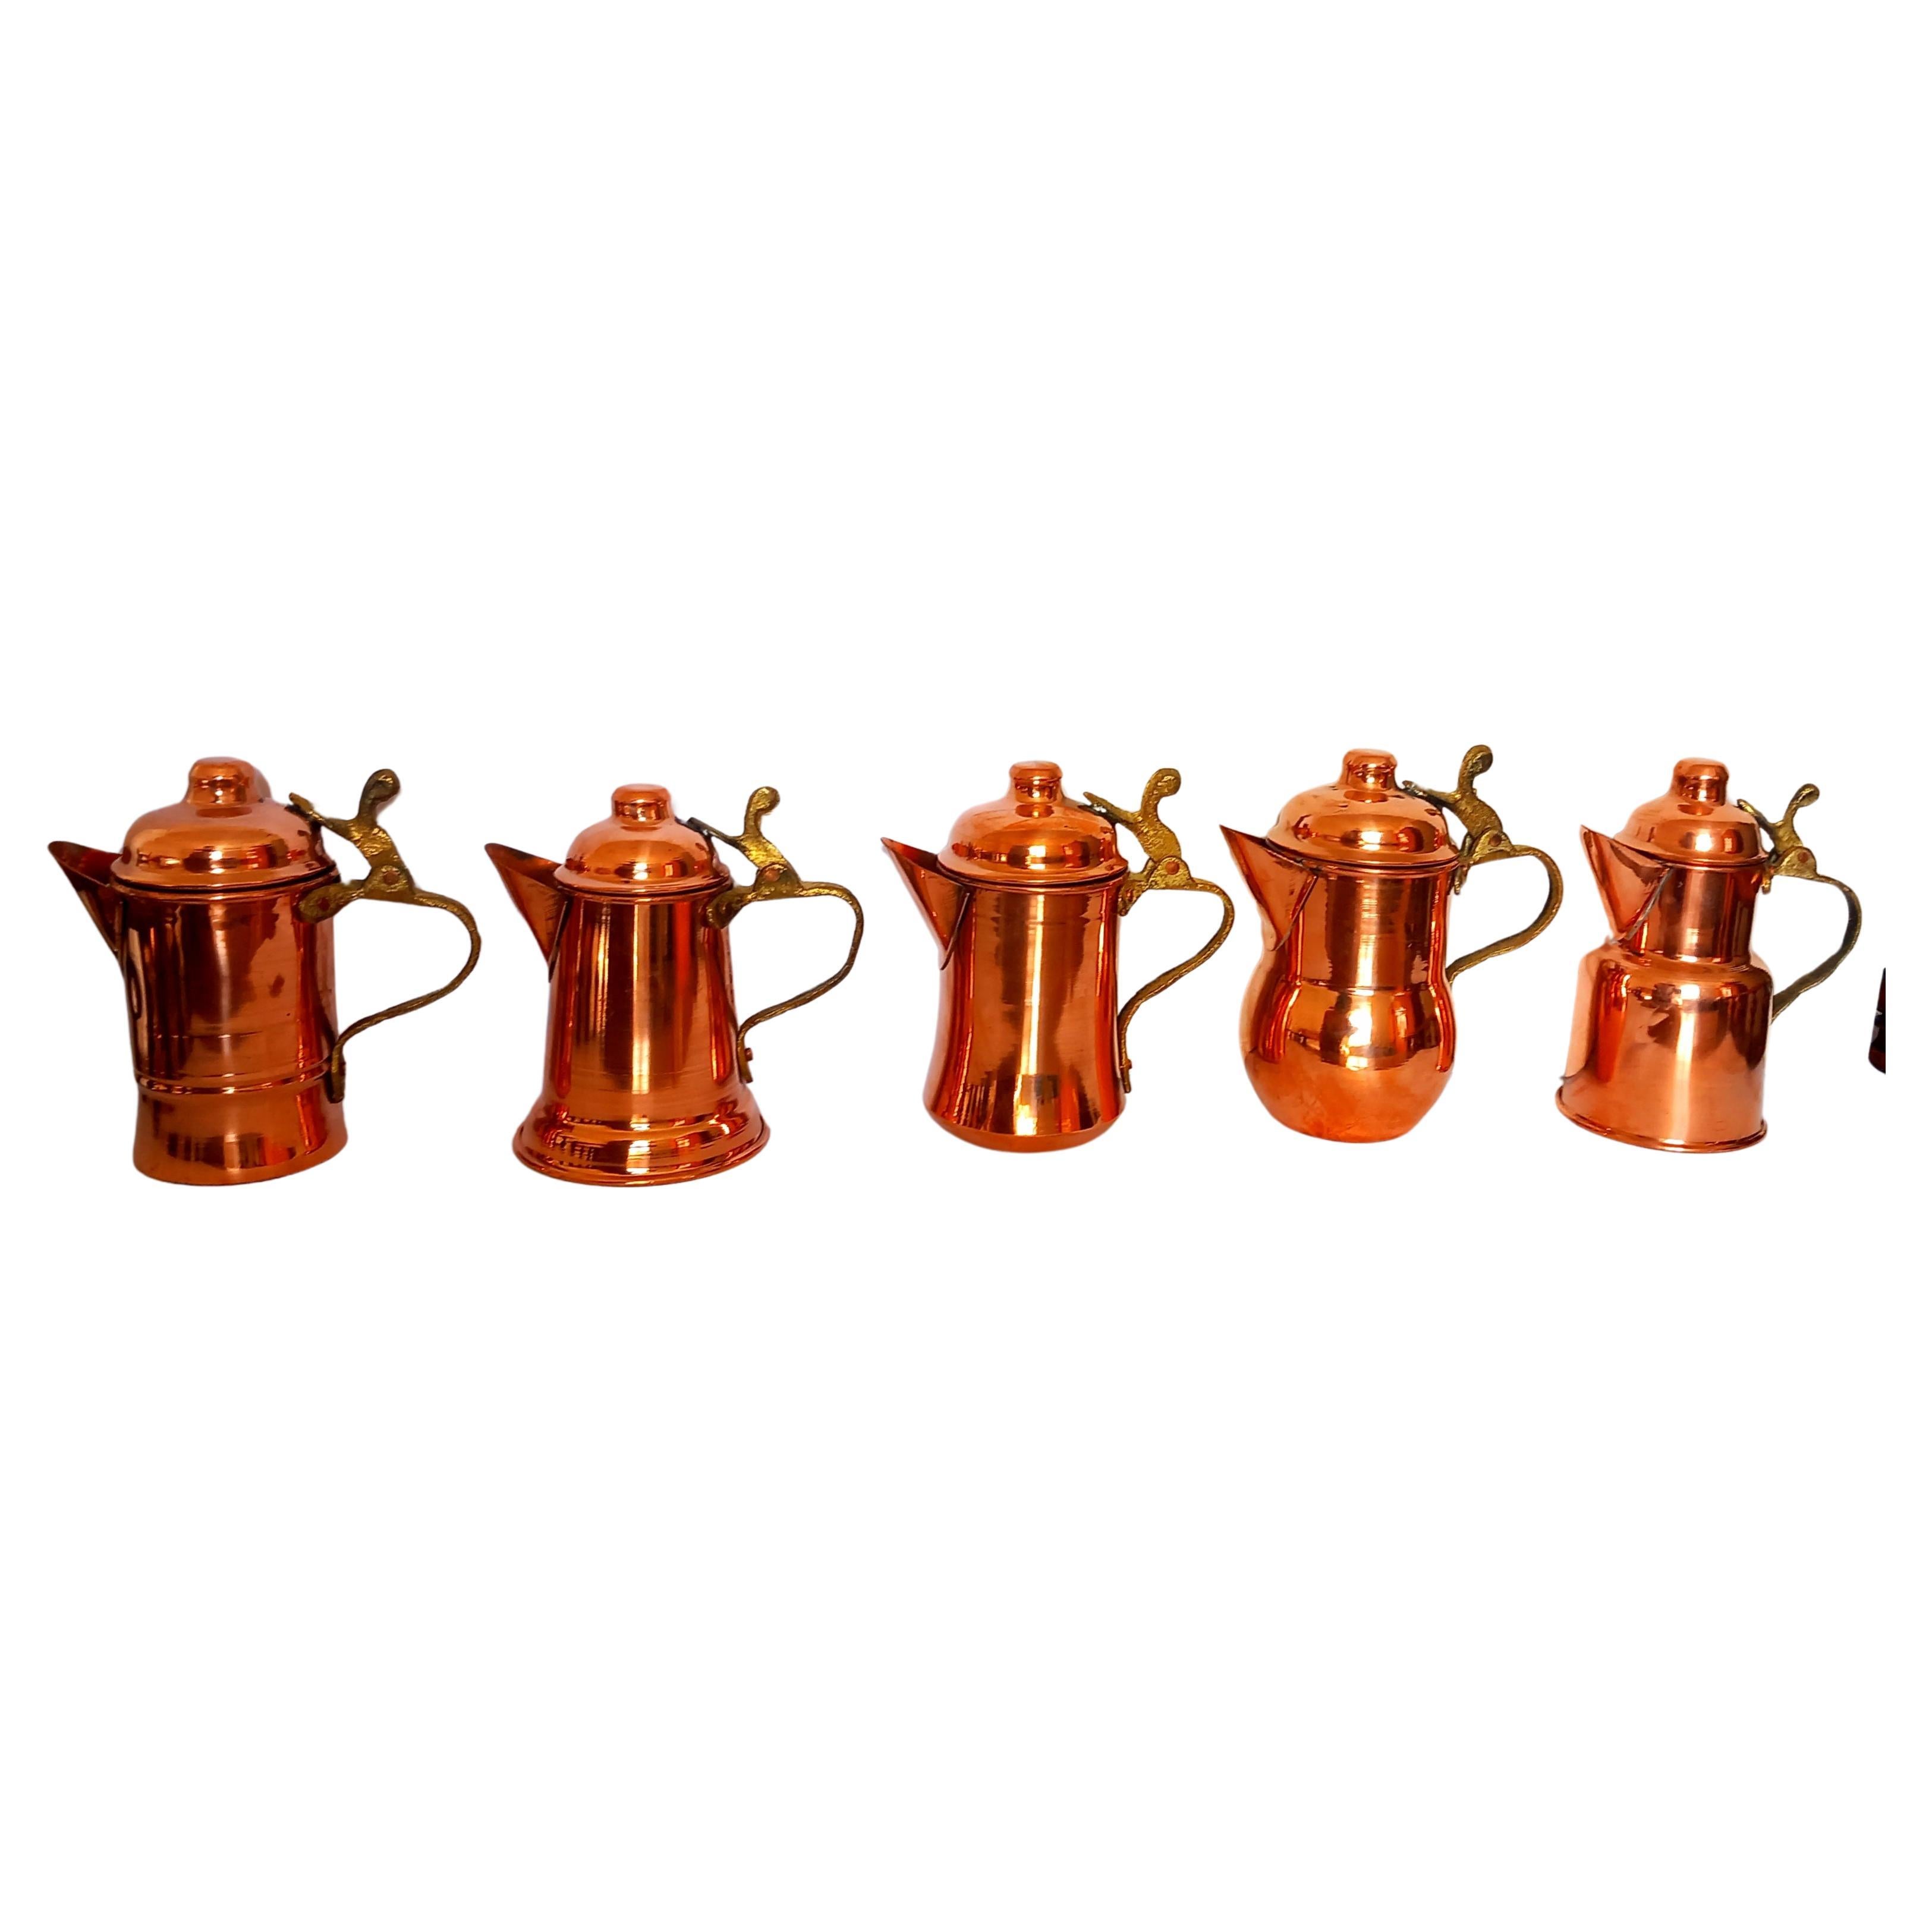 Rustic  Copper Kitchen Decoration Vintage Coffee Pots Lot of 5 Diferent Design For Sale